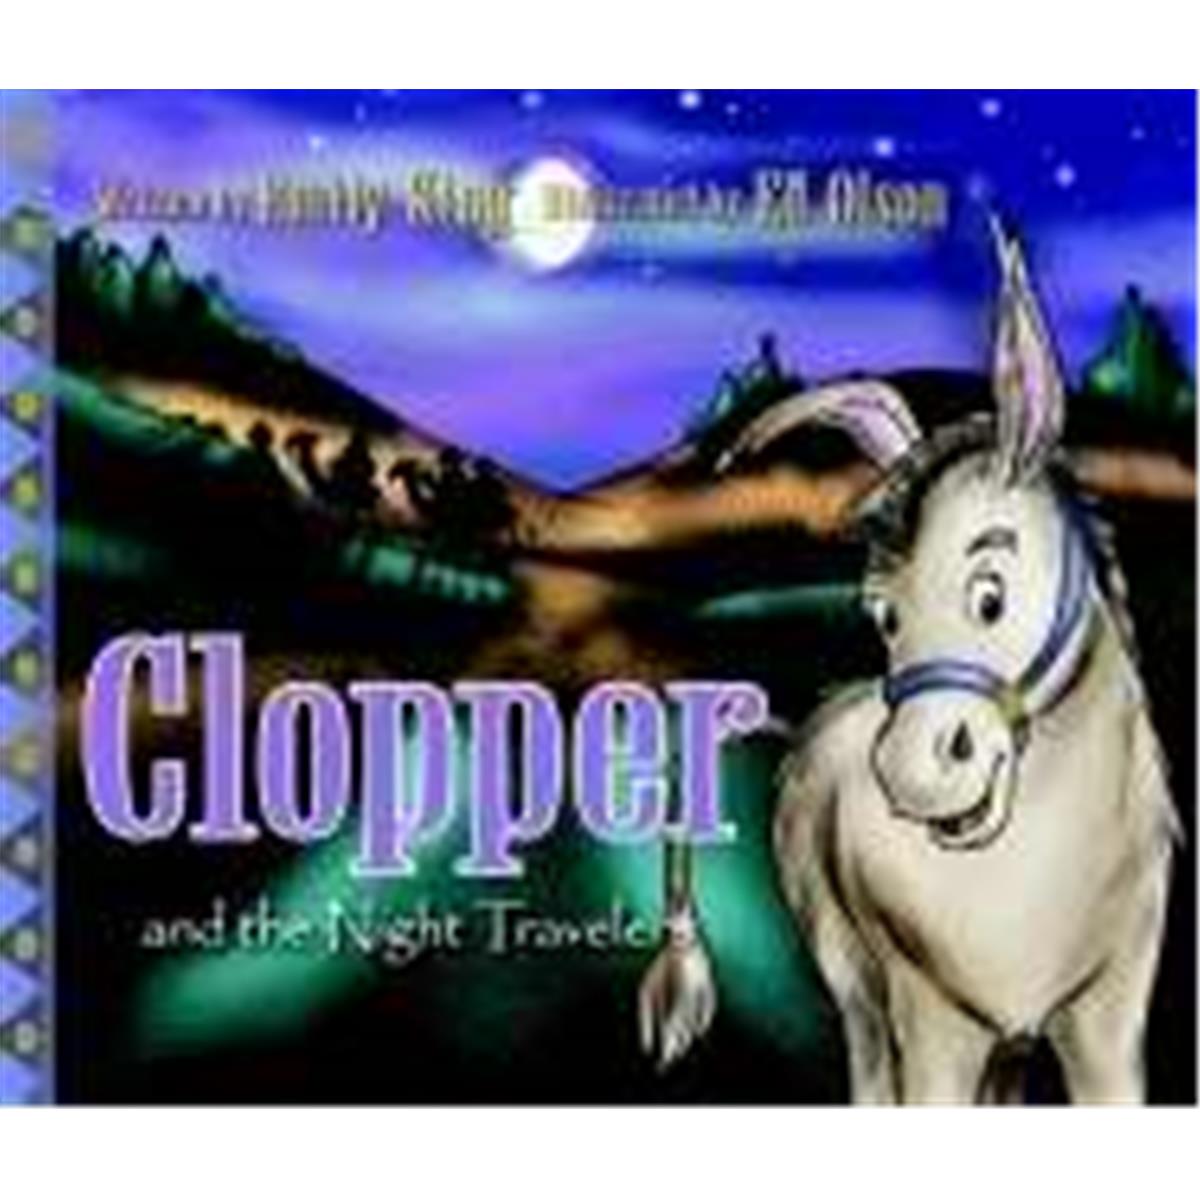 220666 Clopper & The Night Travelers